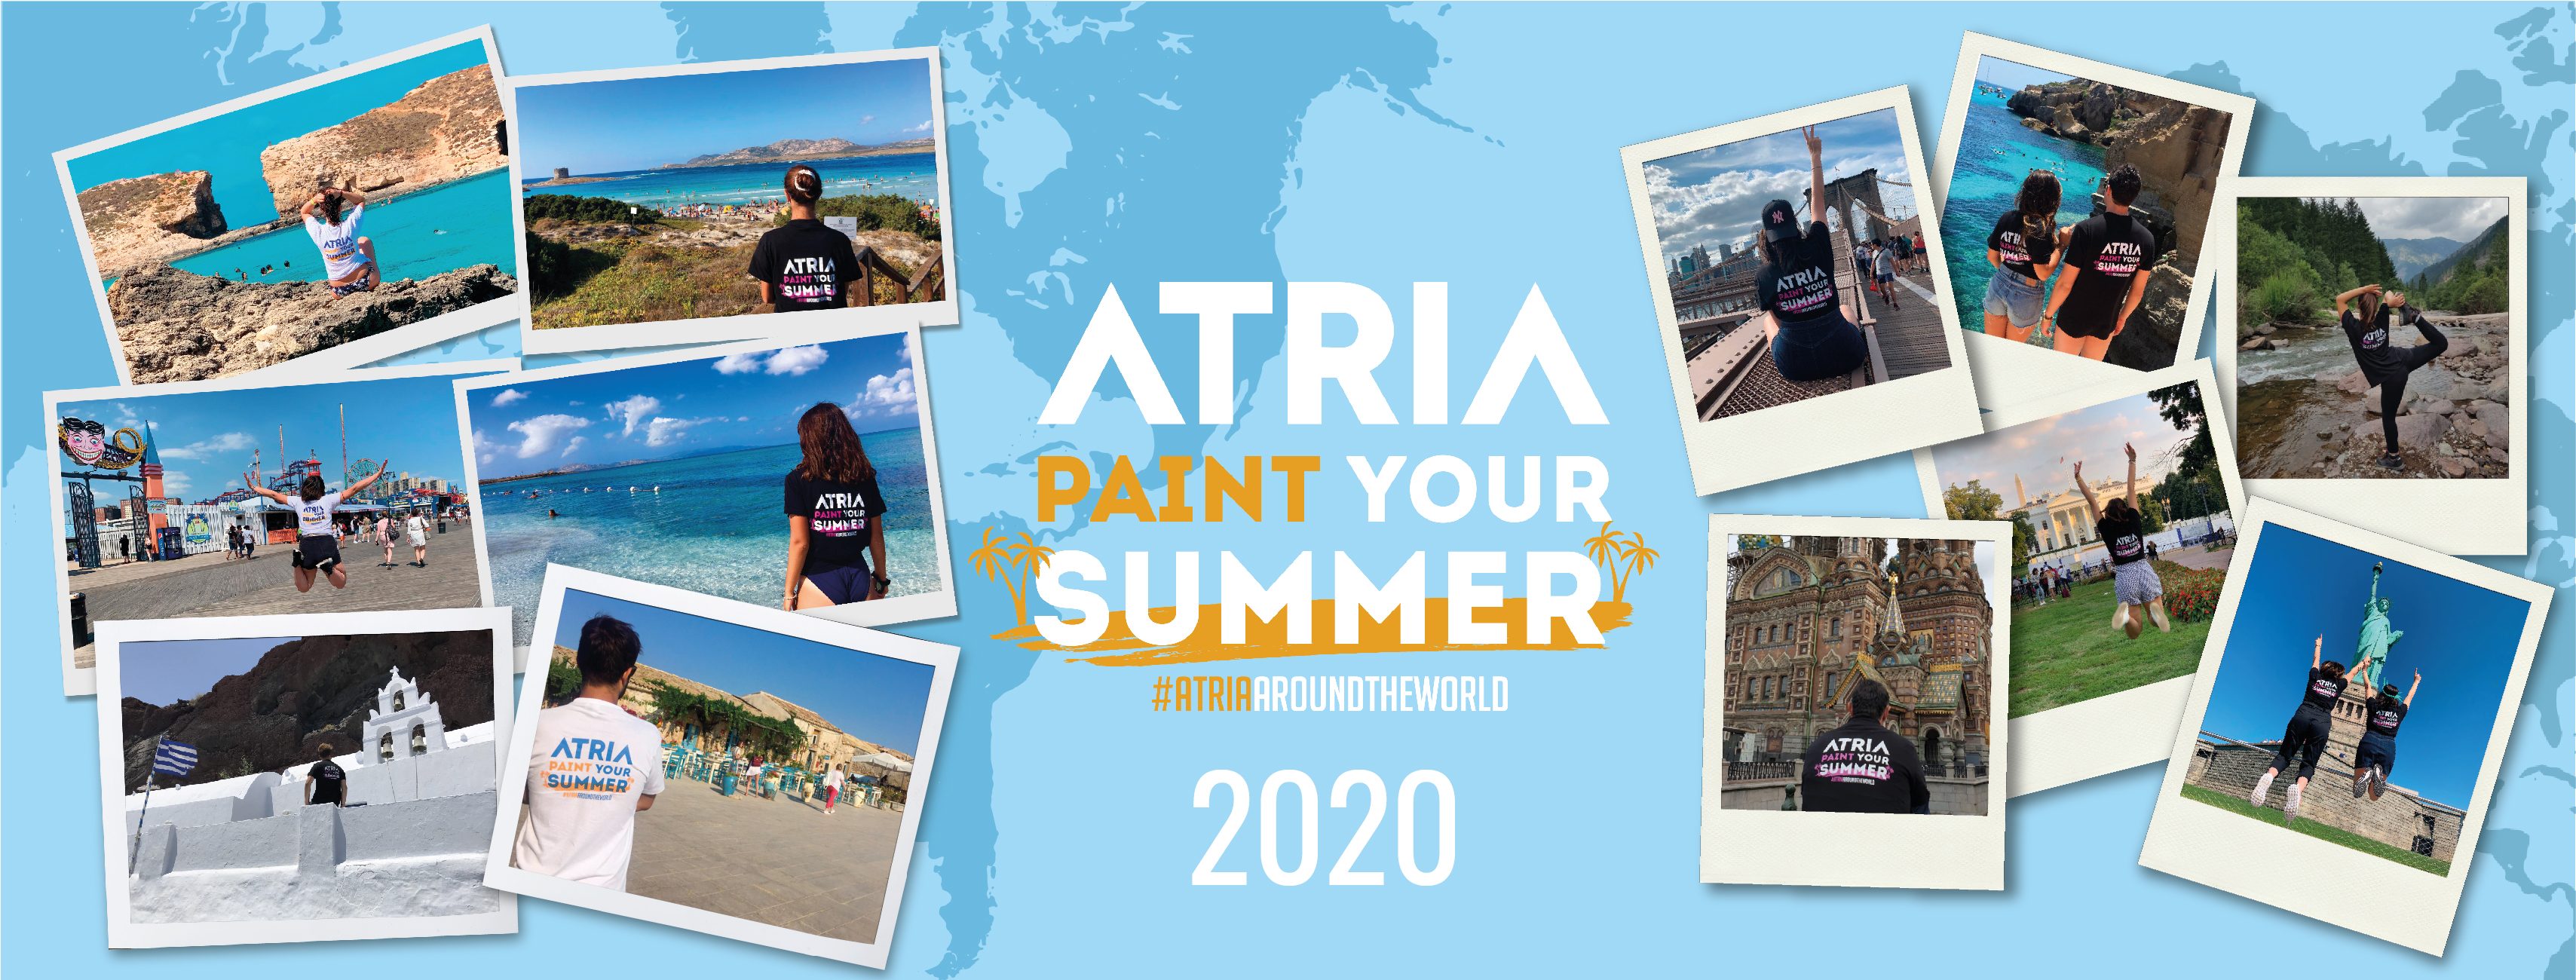 ATRIA - PAINT YOUR SUMMER 2020